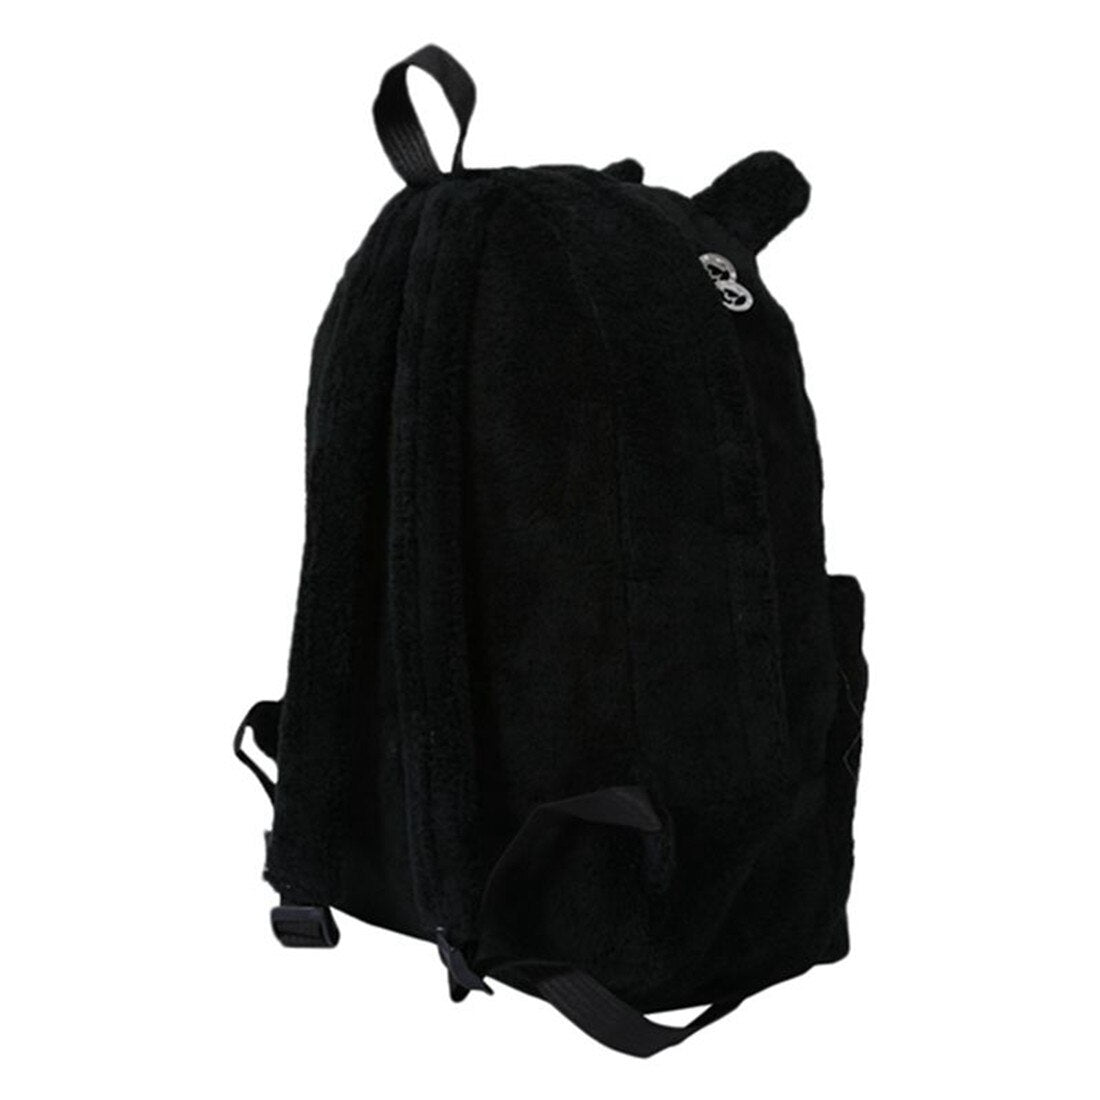 Rotro Backpack Women flush Bag Women Bag Small Women Backpack Mochila Feminina School Bags for Teenagers - ebowsos